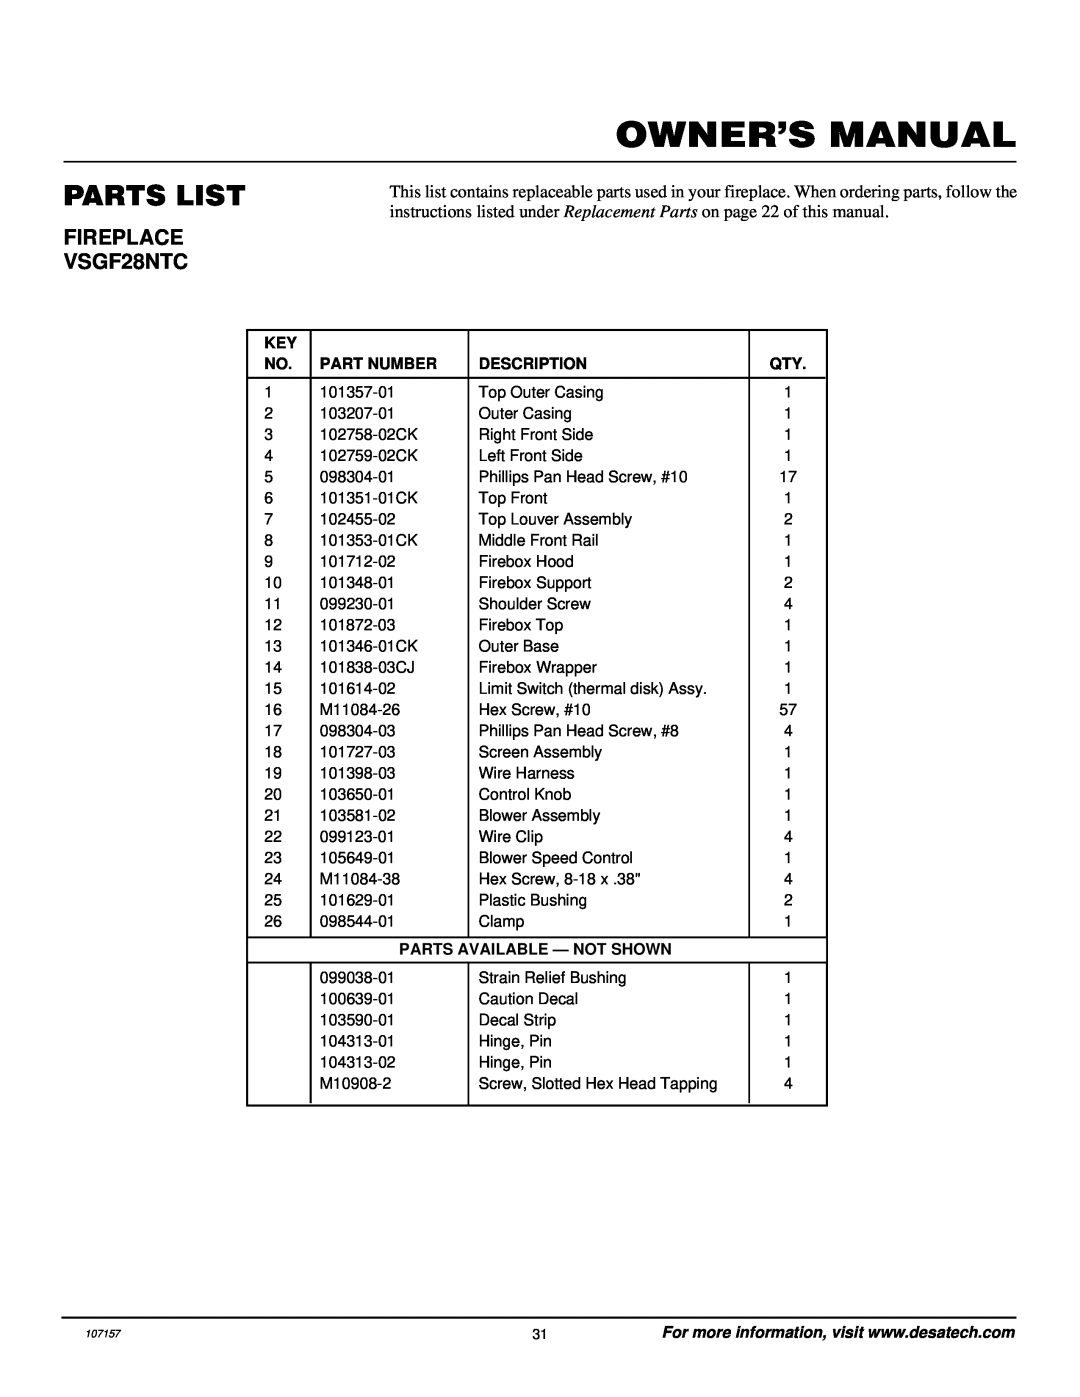 Vanguard Heating VSGF28NVA Parts List, FIREPLACE VSGF28NTC, Part Number, Description, Parts Available - Not Shown 